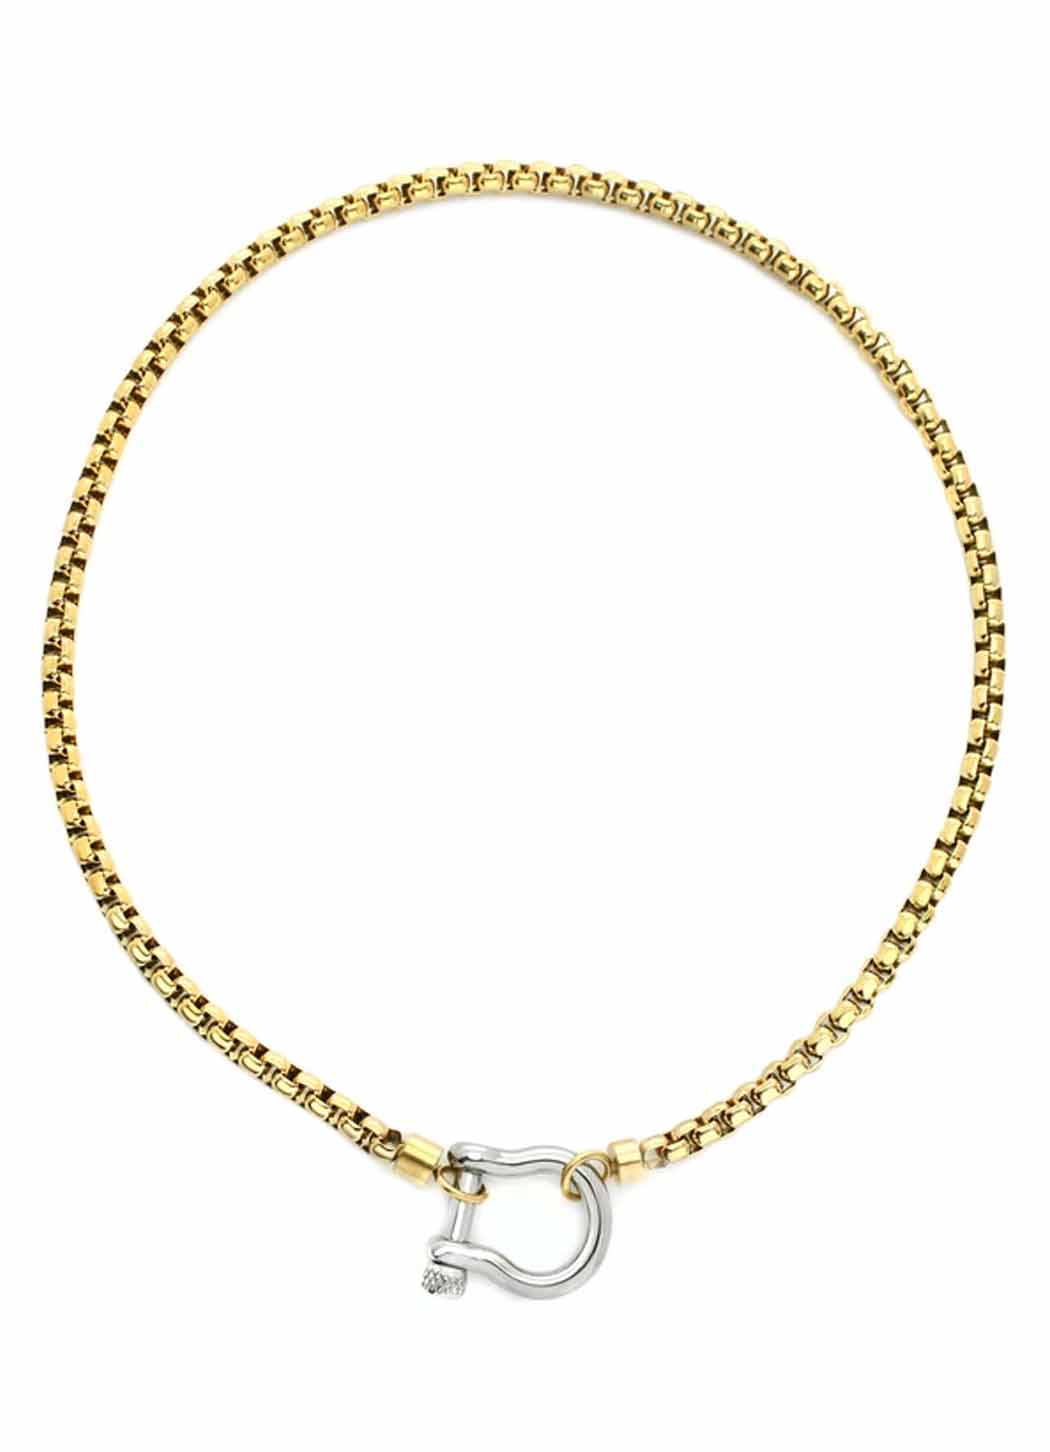 10 Types of Jewelry Chains – Artizan Joyeria